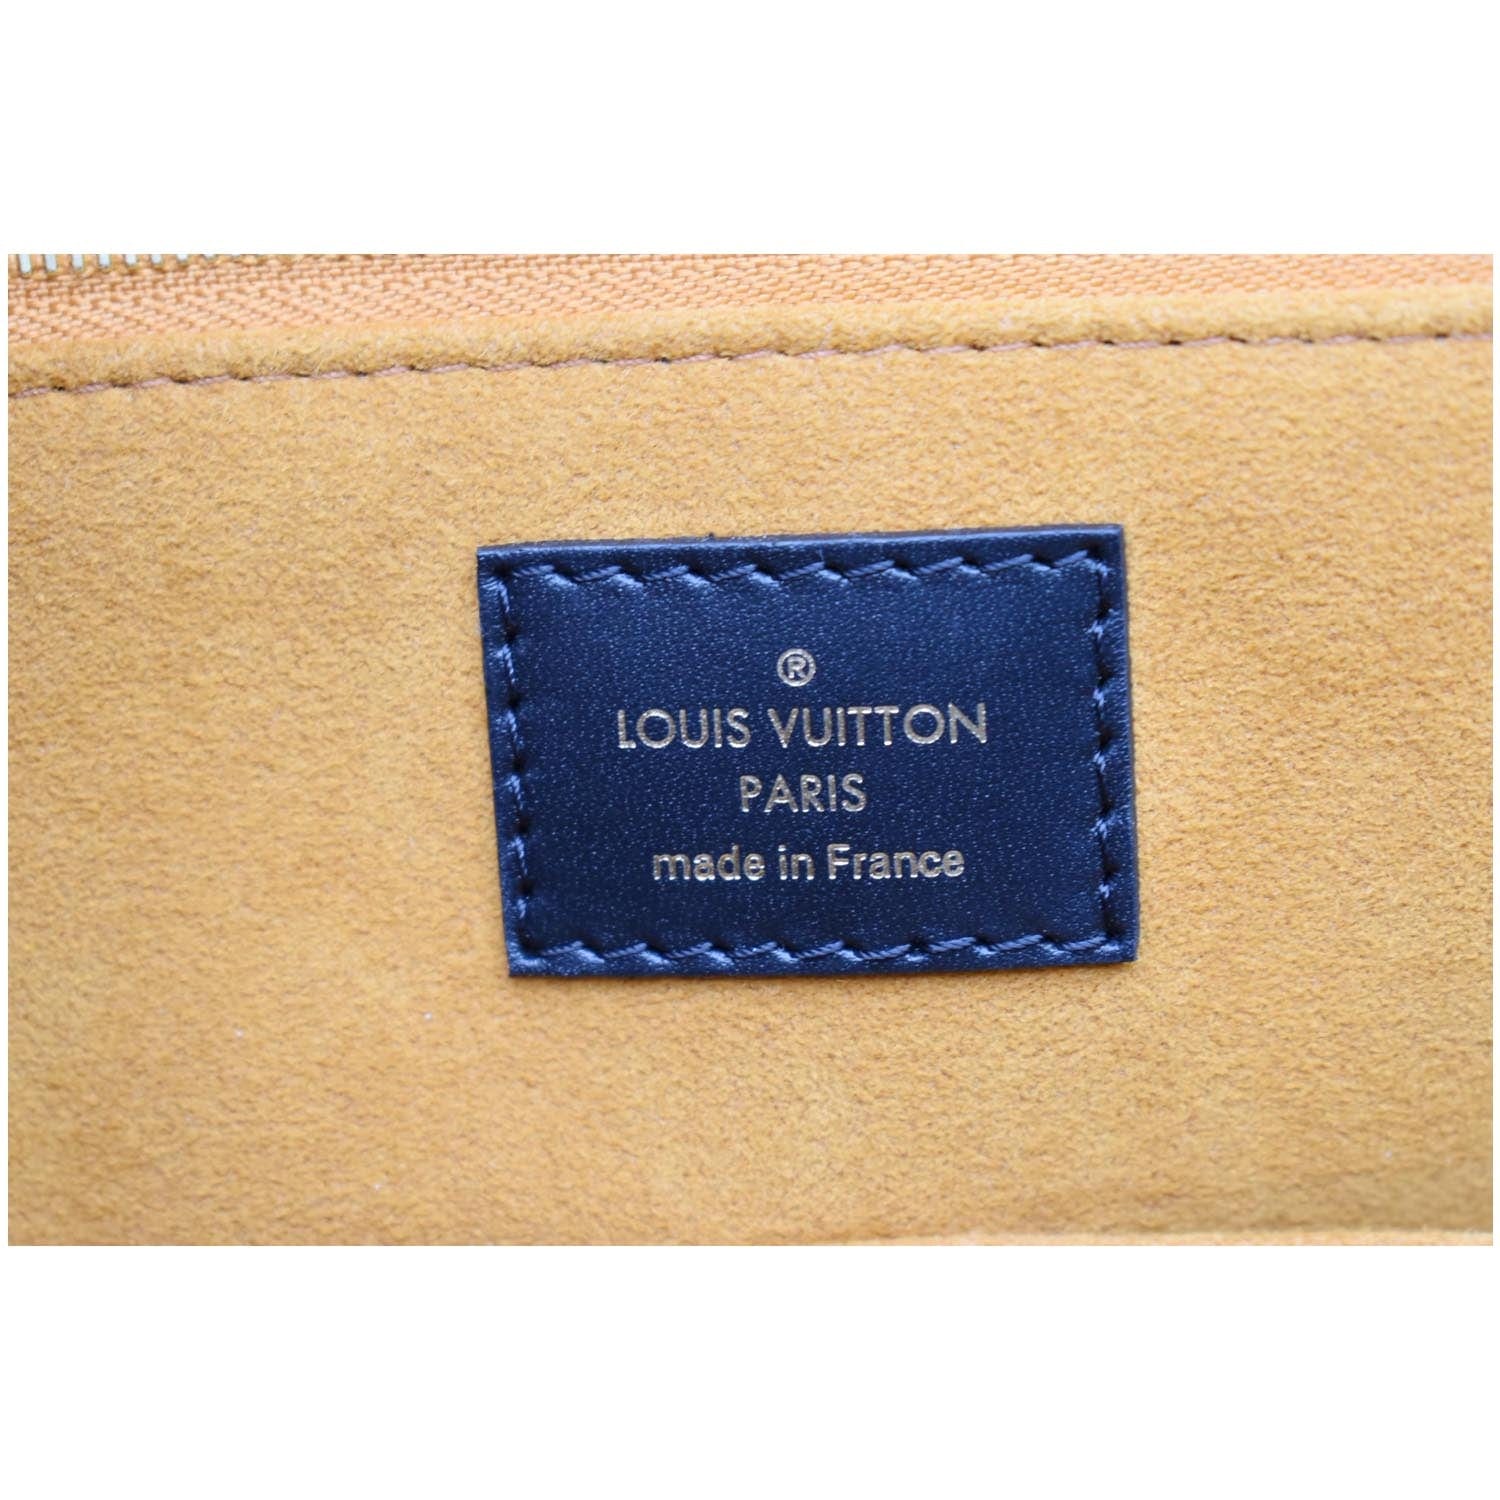 Louis Vuitton Empreinte OnTheGo GM Black – DAC